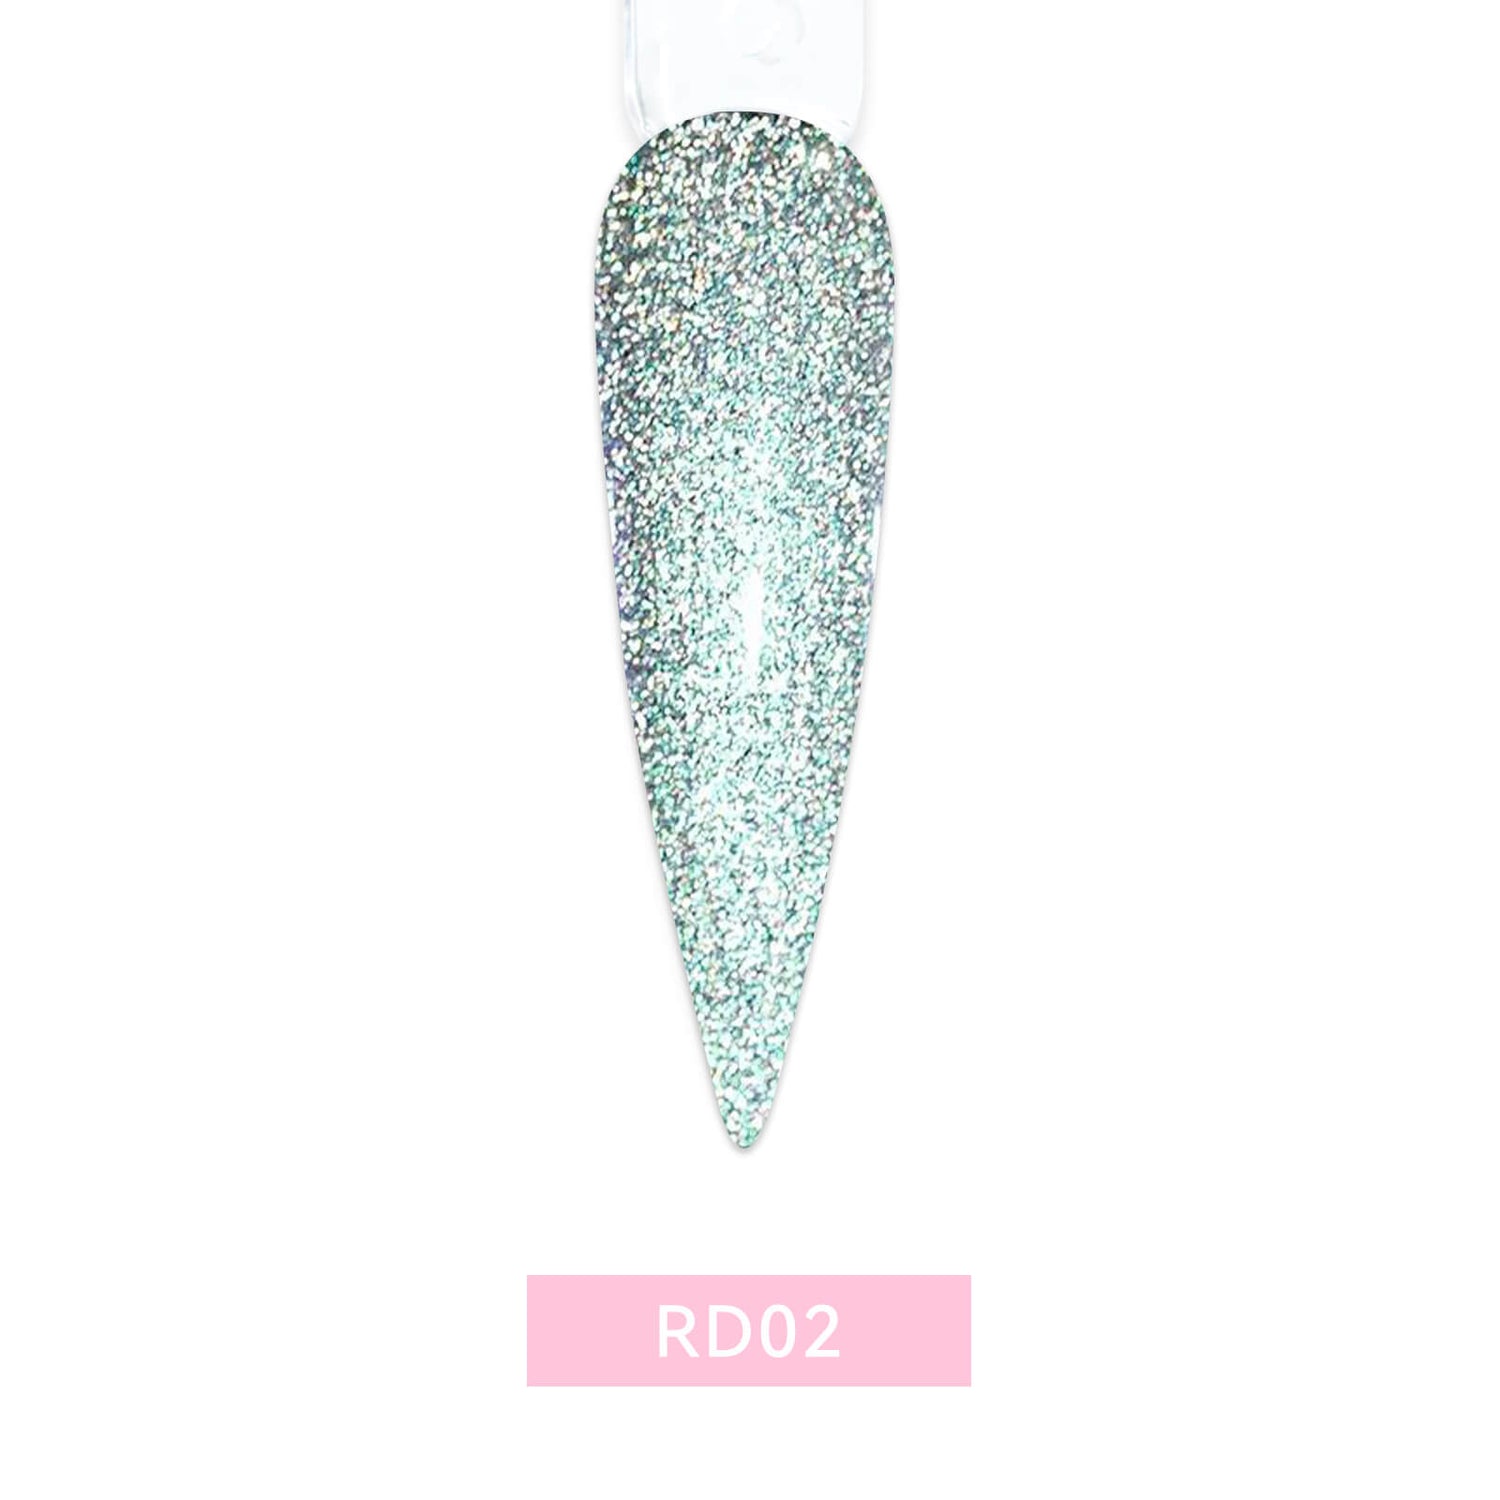 reflective-diamond-glitter-gel-polish-RD02-flash-on